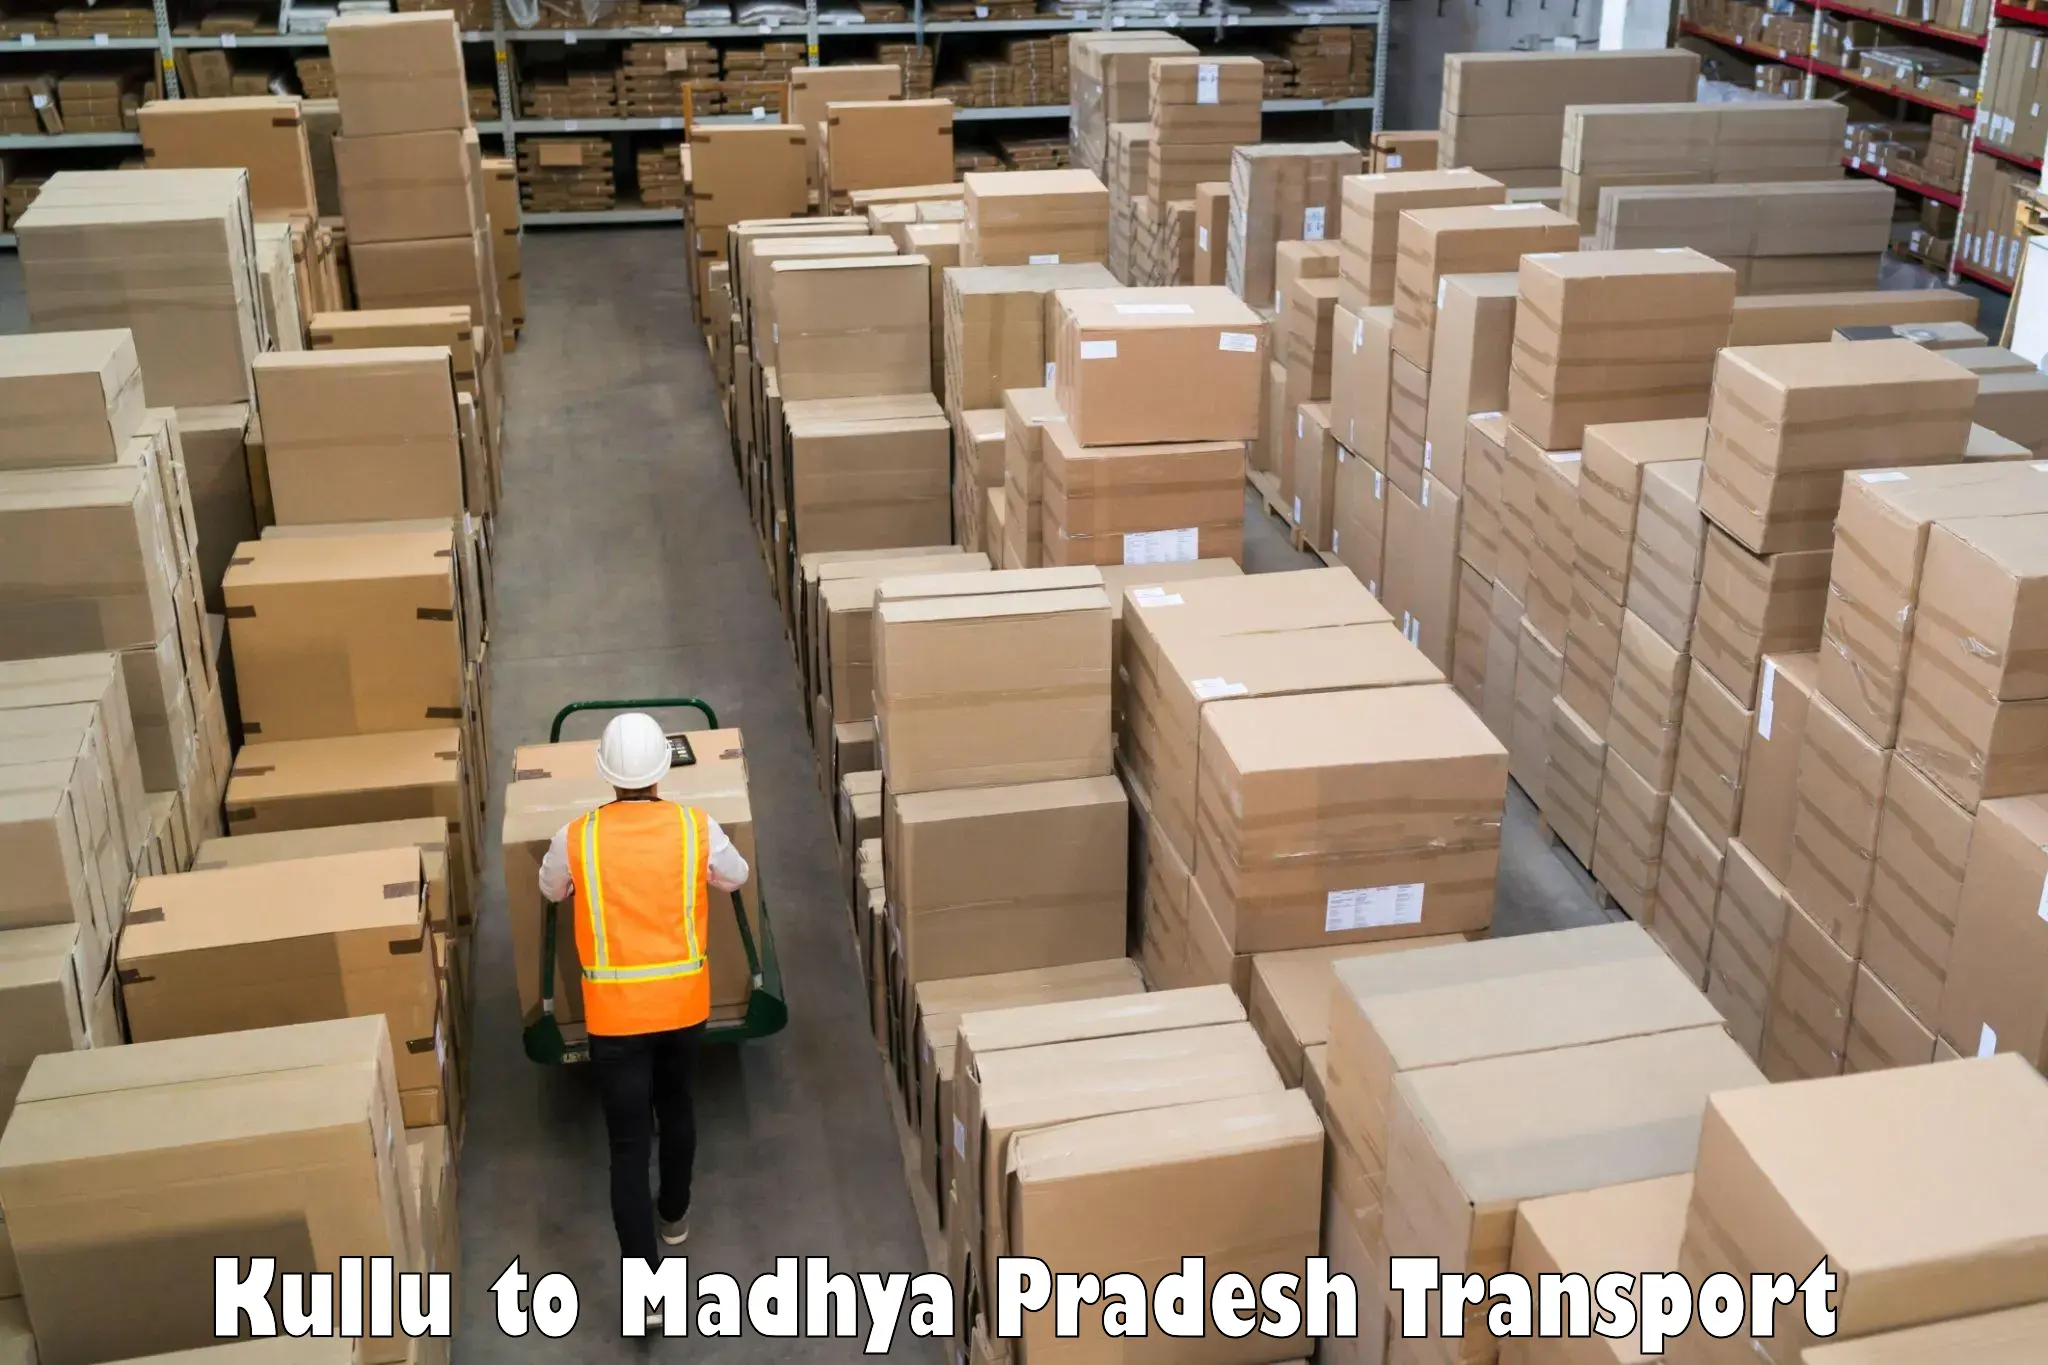 Shipping partner Kullu to Maheshwar